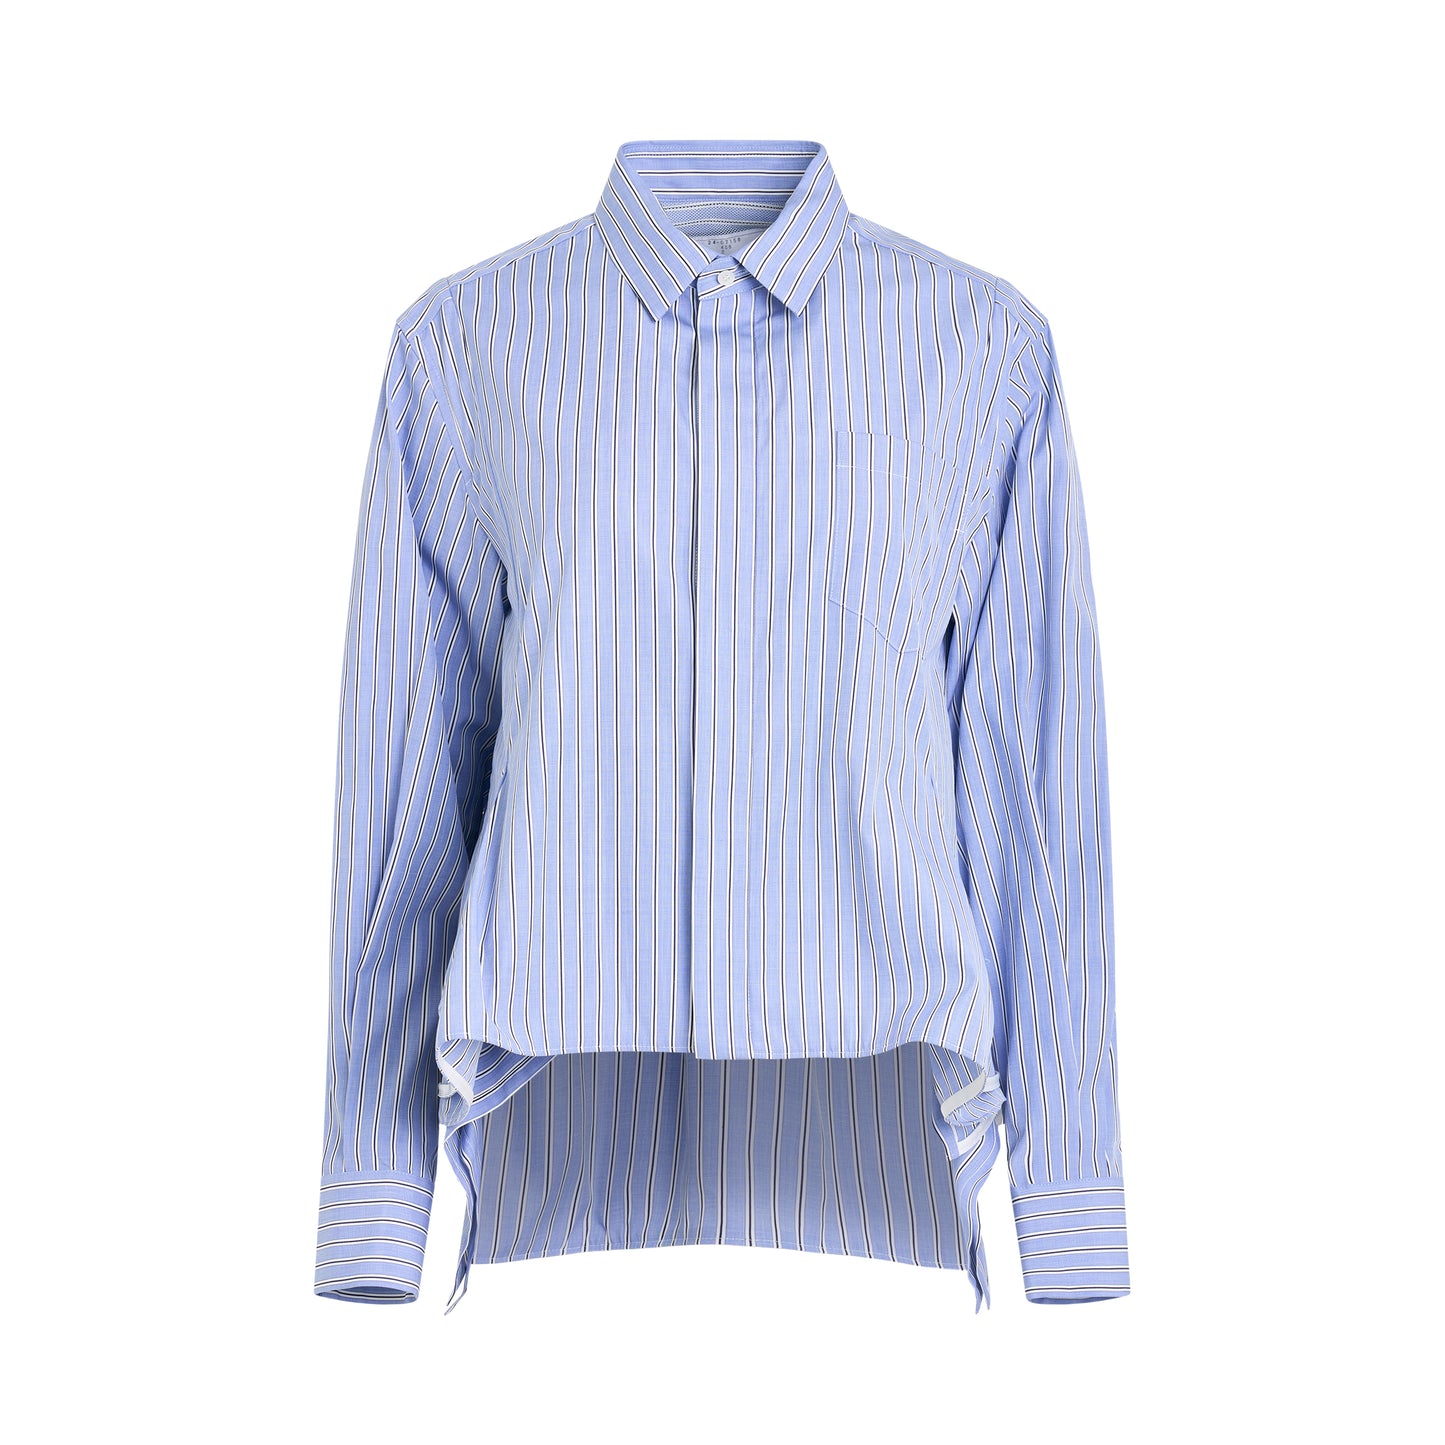 Rushed Thomas Mason Cotton Poplin Shirt in Light Blue Stripe